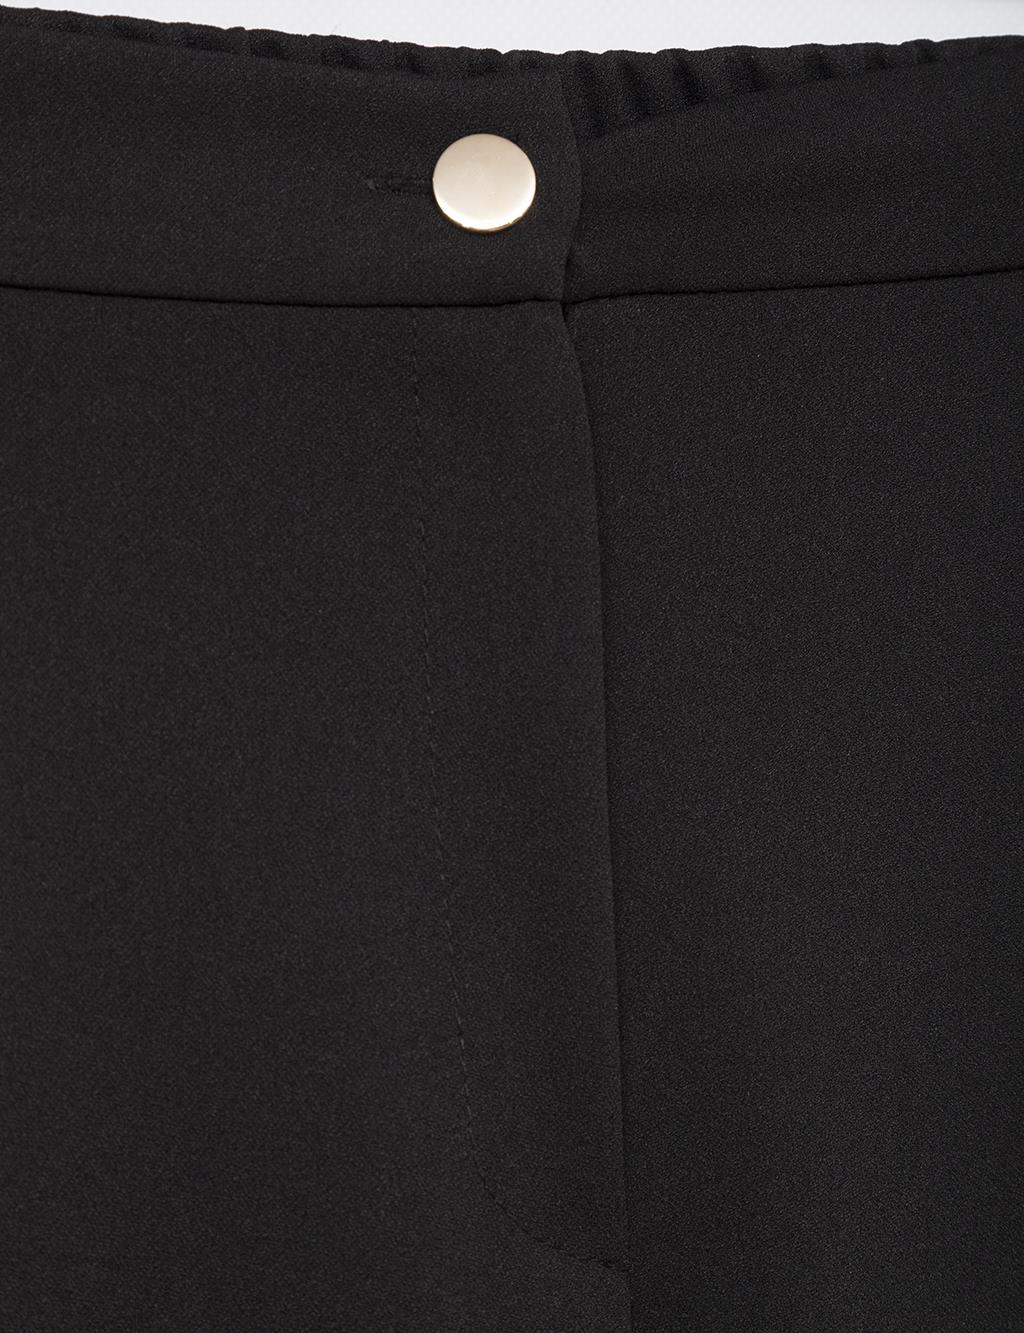 Elastic Waist with Side Stripe Detail Pants in Black